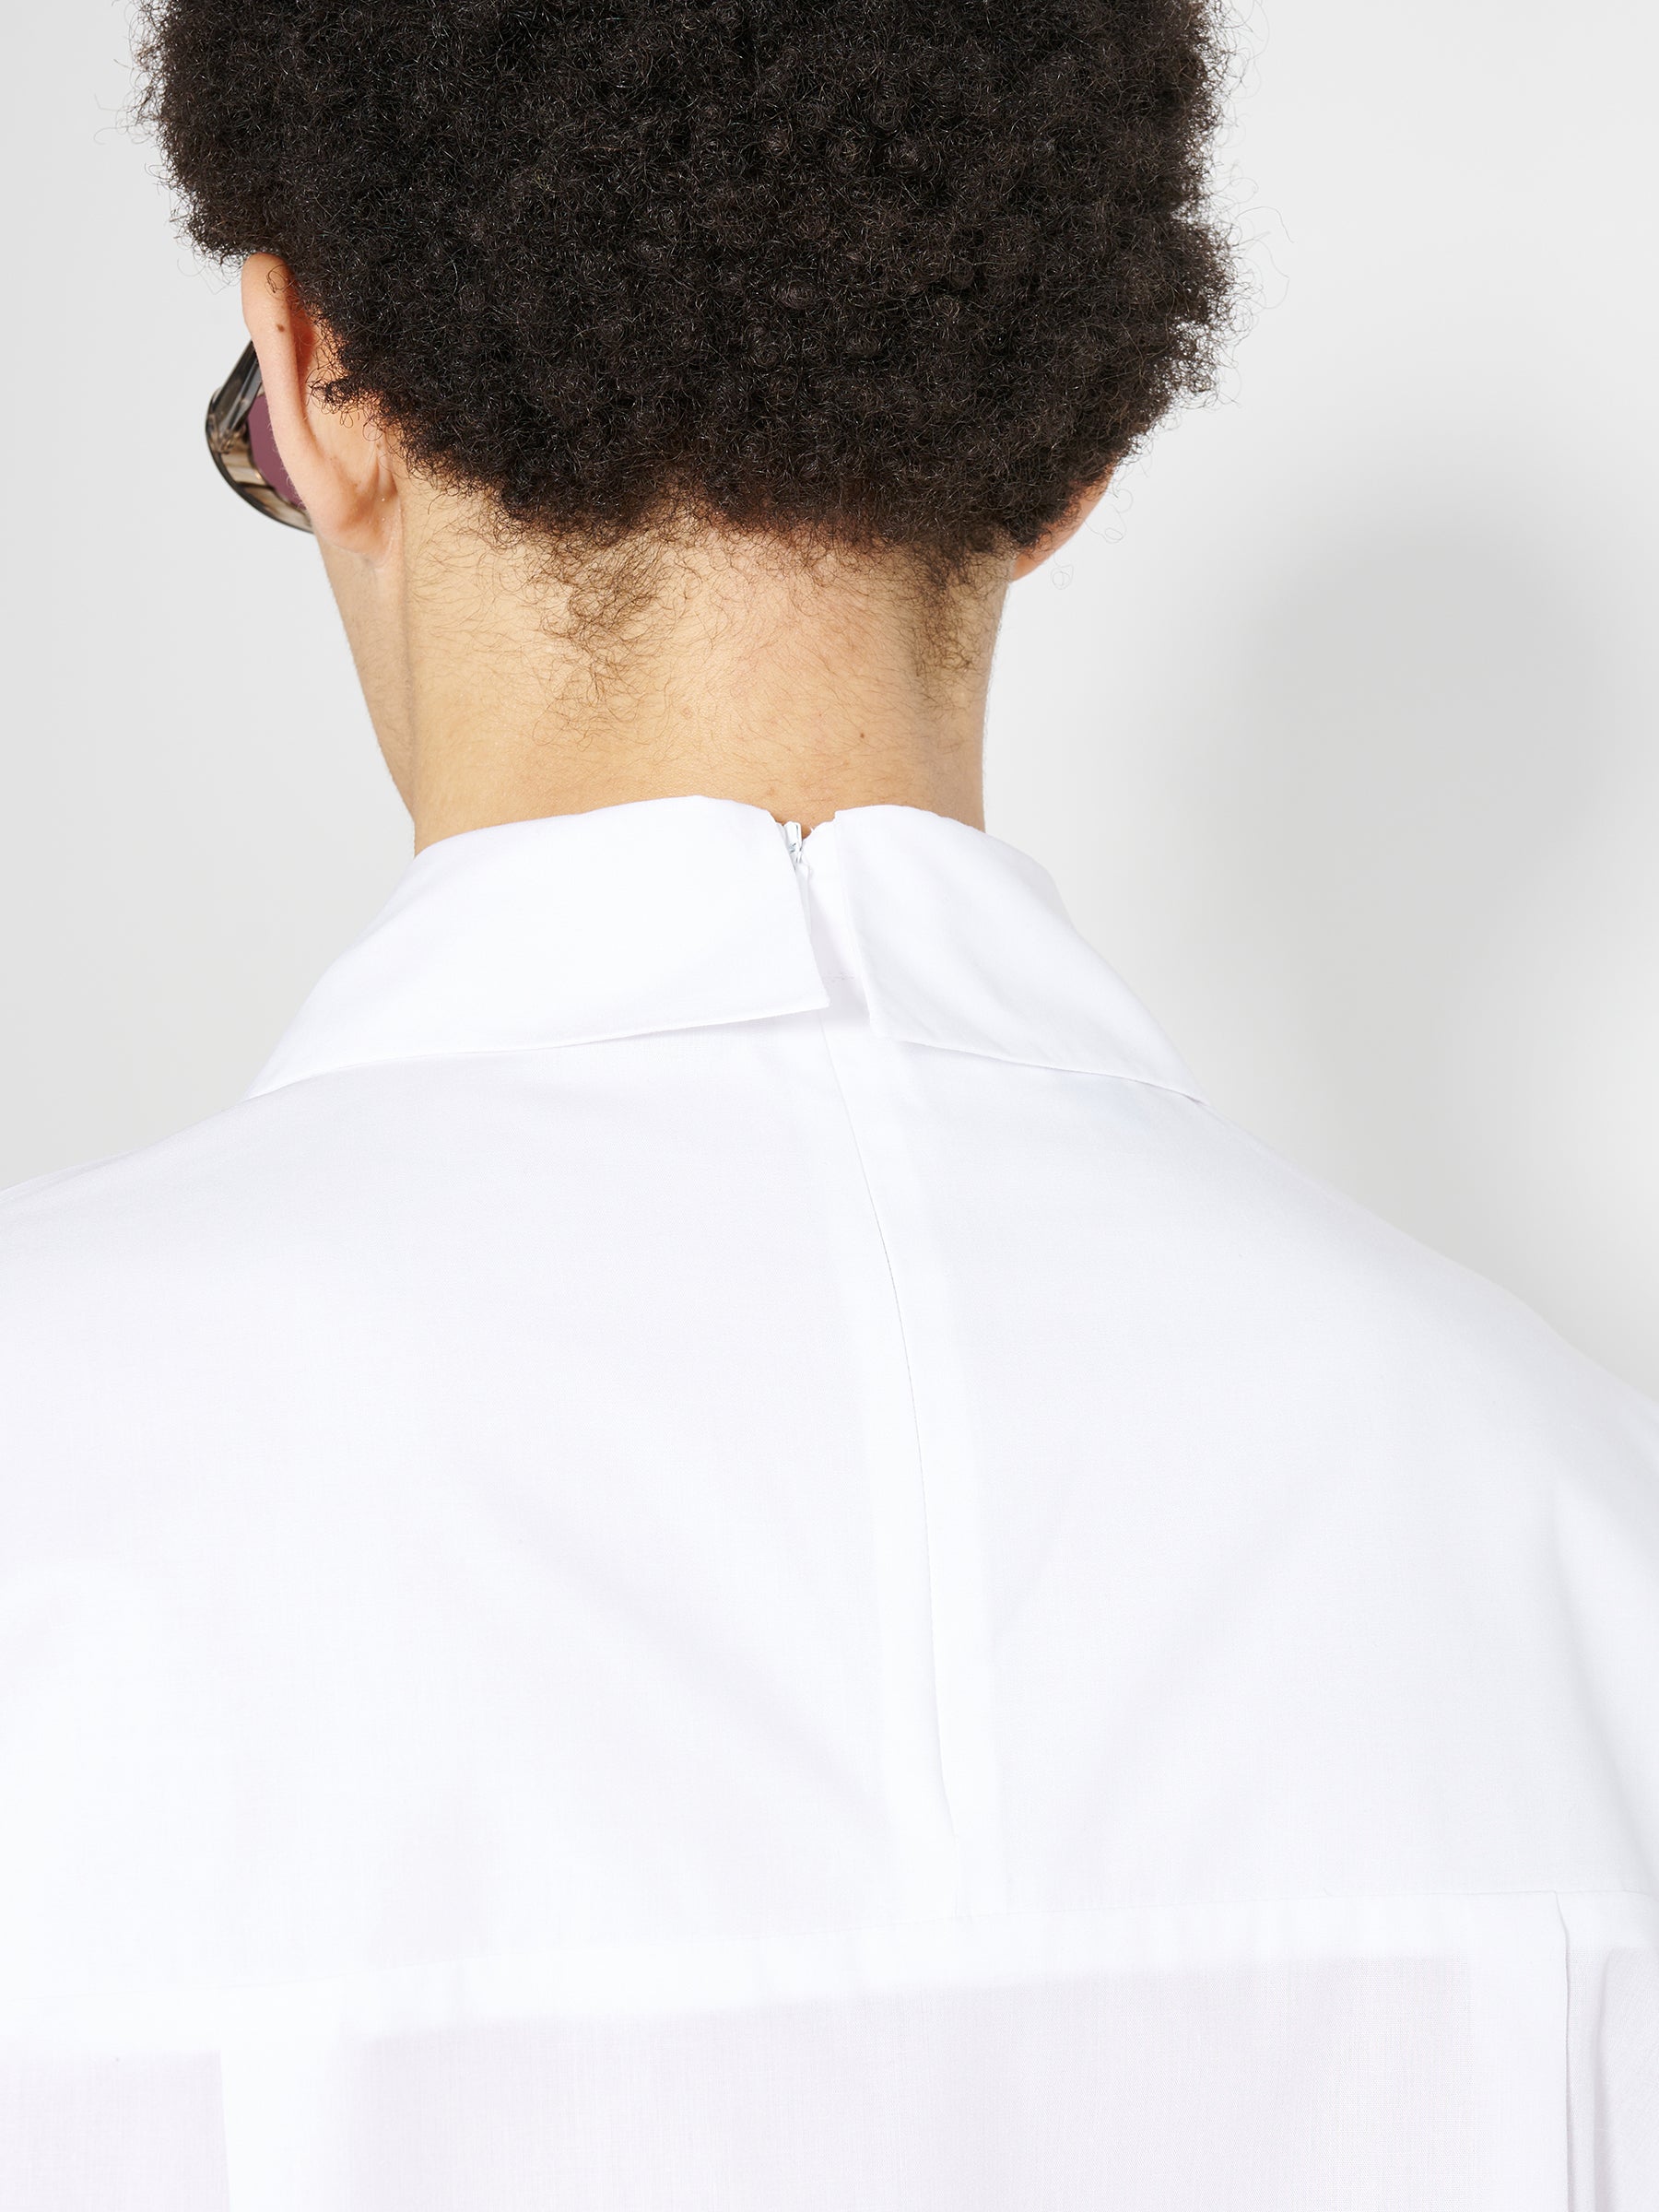 Olly Shinder Vanishing Tie Shirt White